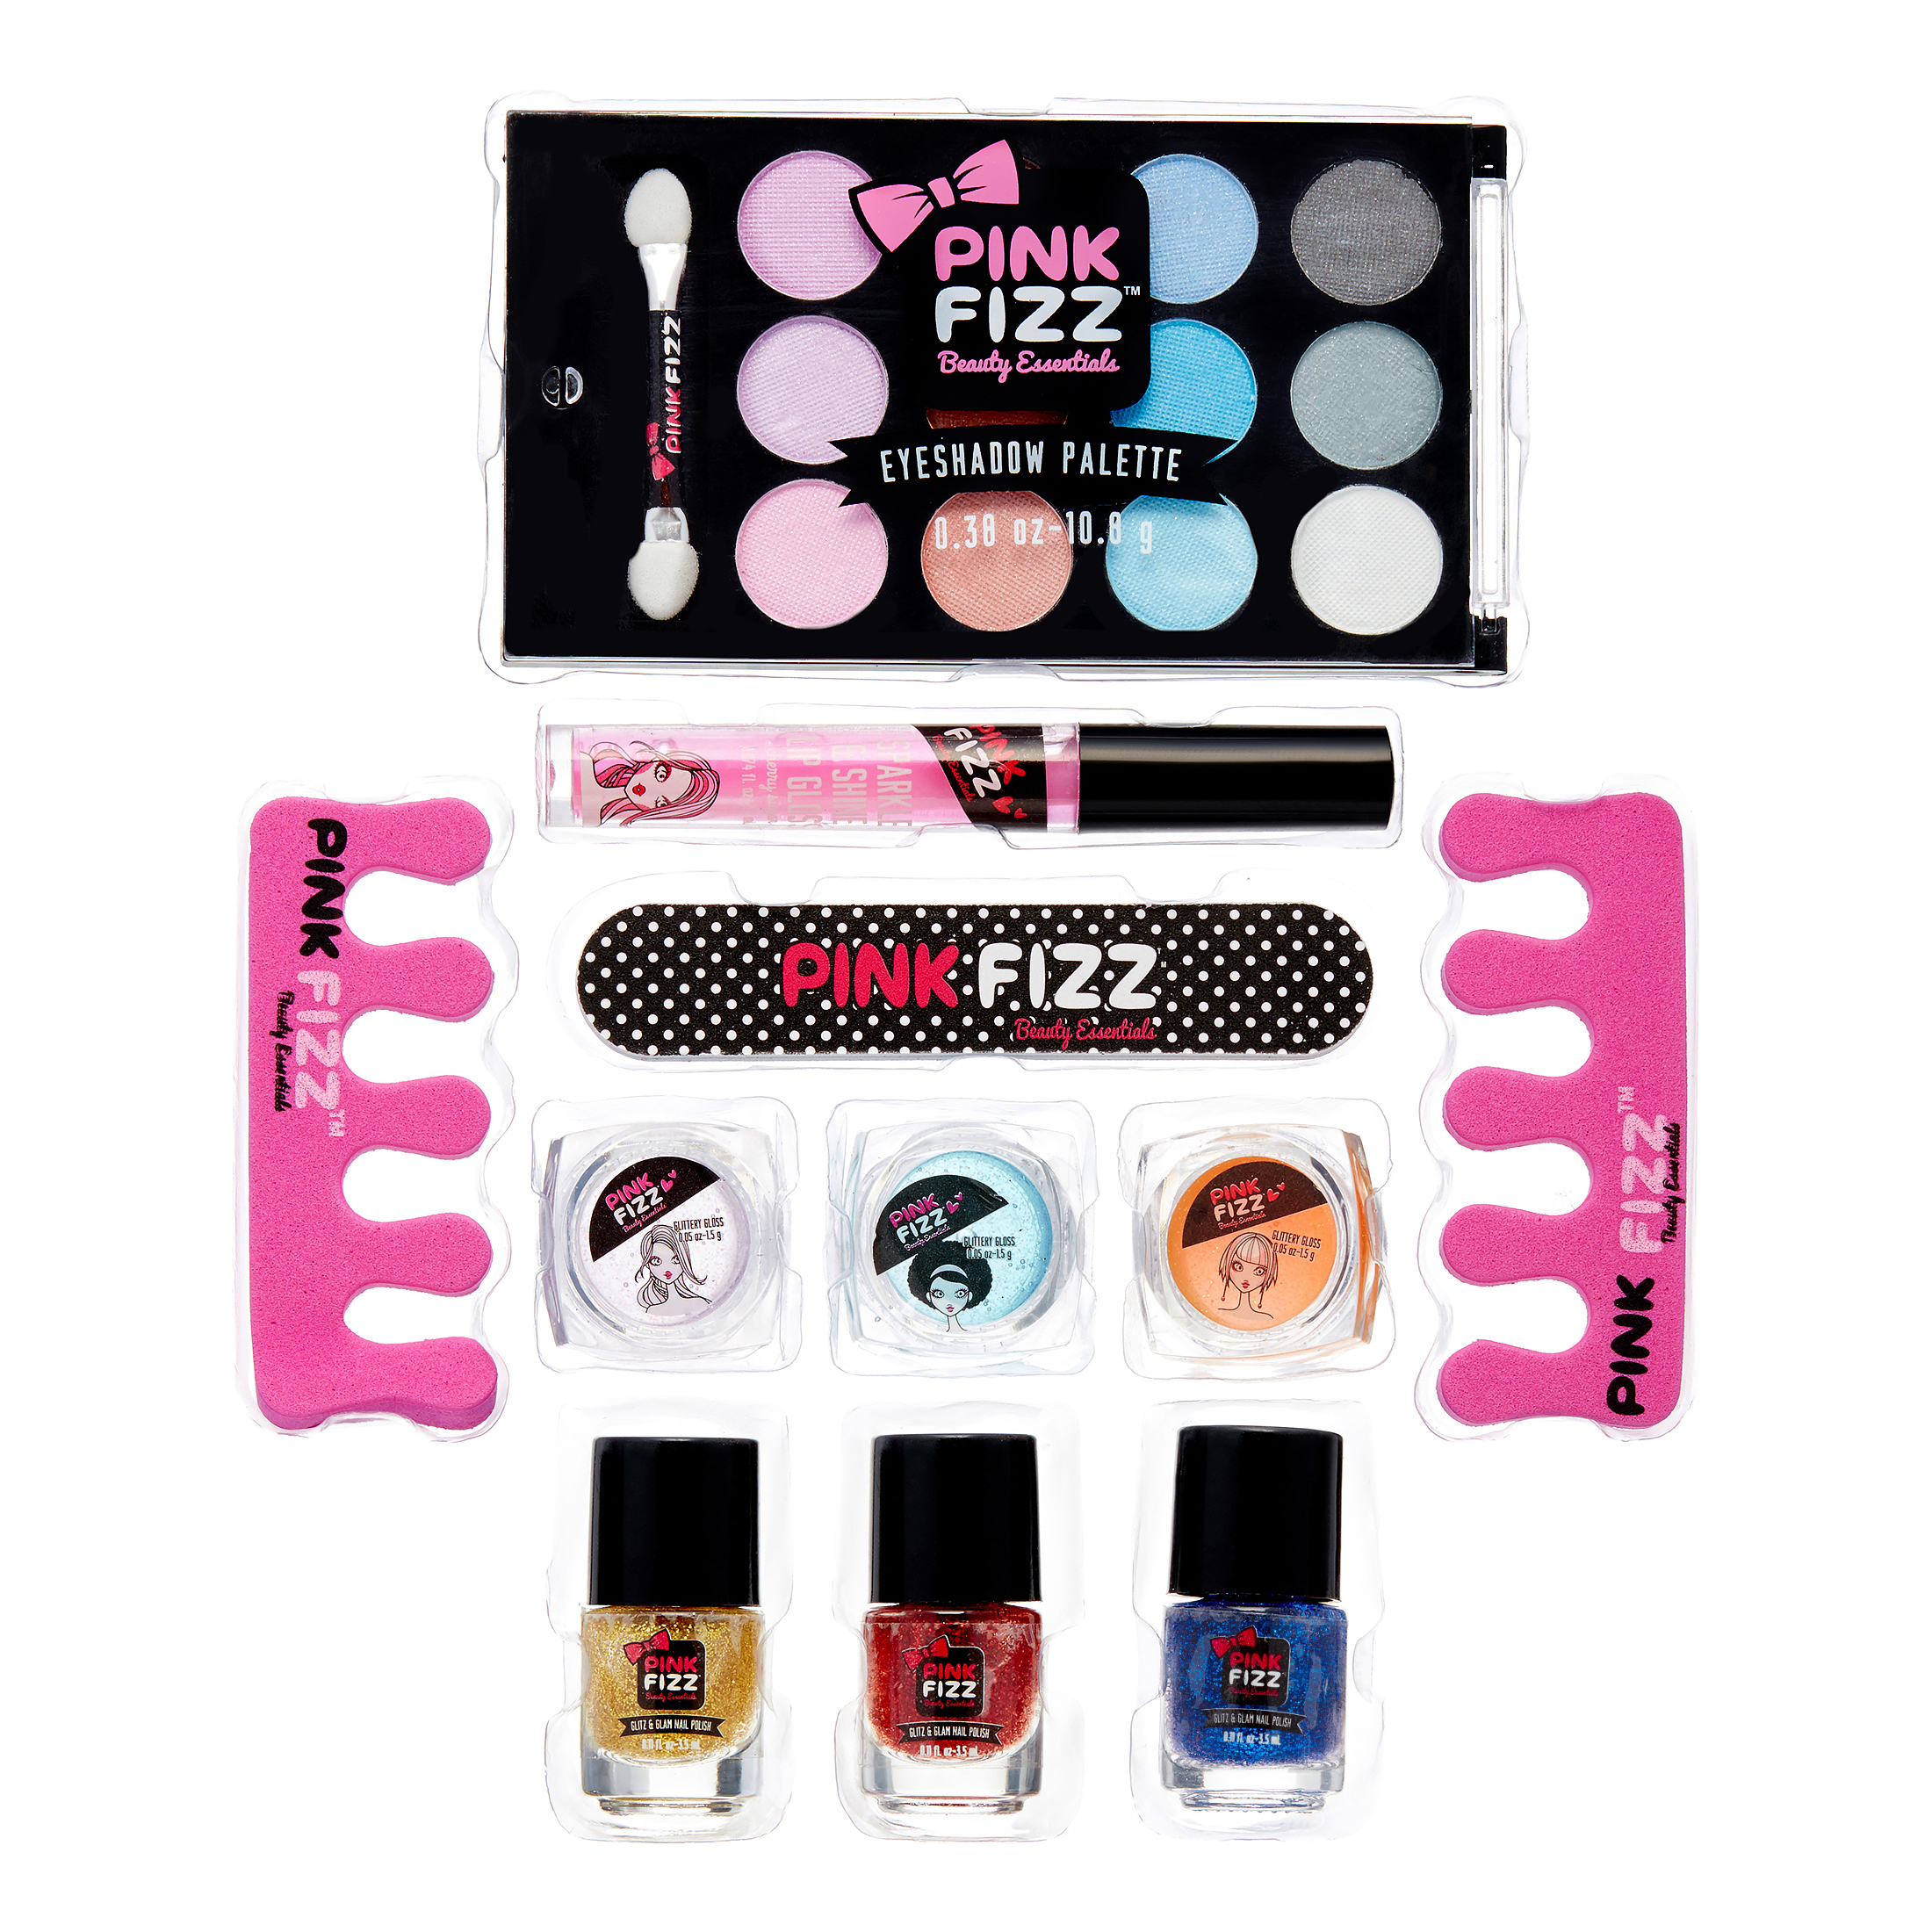 Pink Fizz Little Bow Chic Makeup Set, 11 Pieces - image 1 of 6